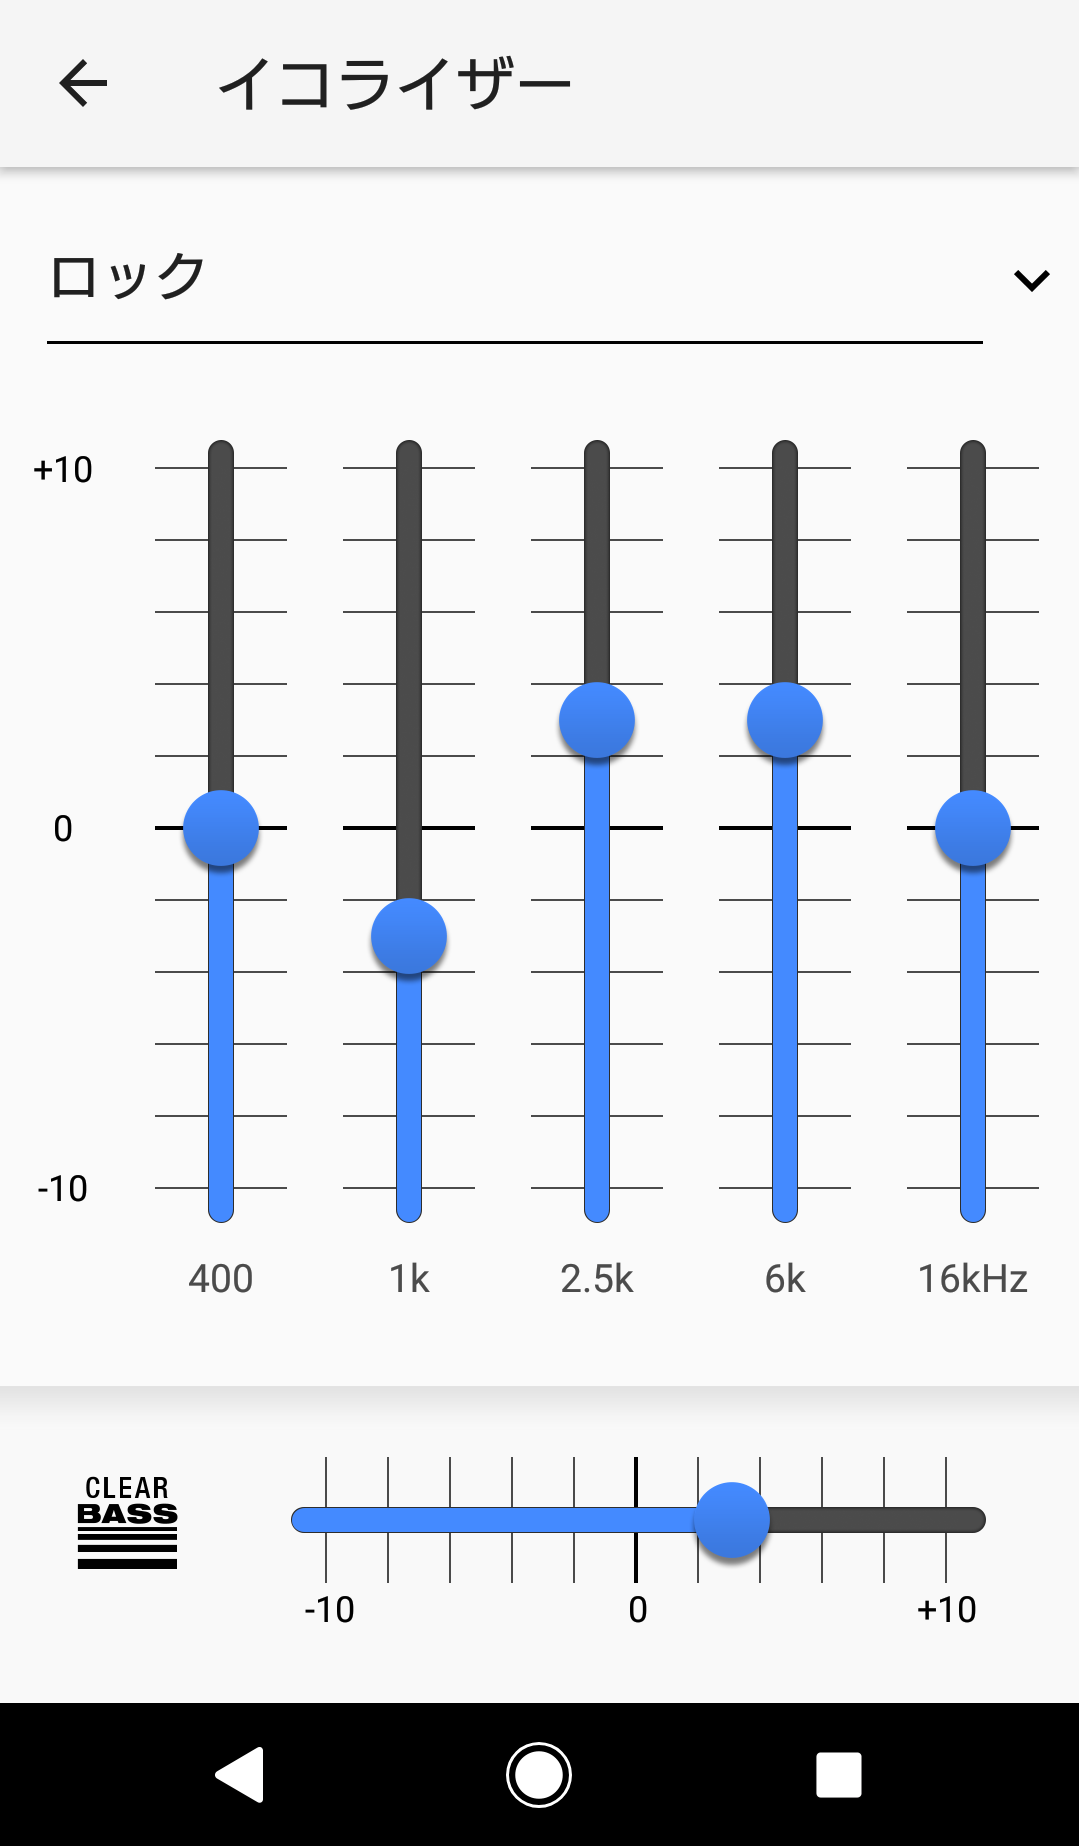 Xperiaの イコライザー設定 でこだわりの音質にカスタマイズしよう Xperia Tips Engadget 日本版